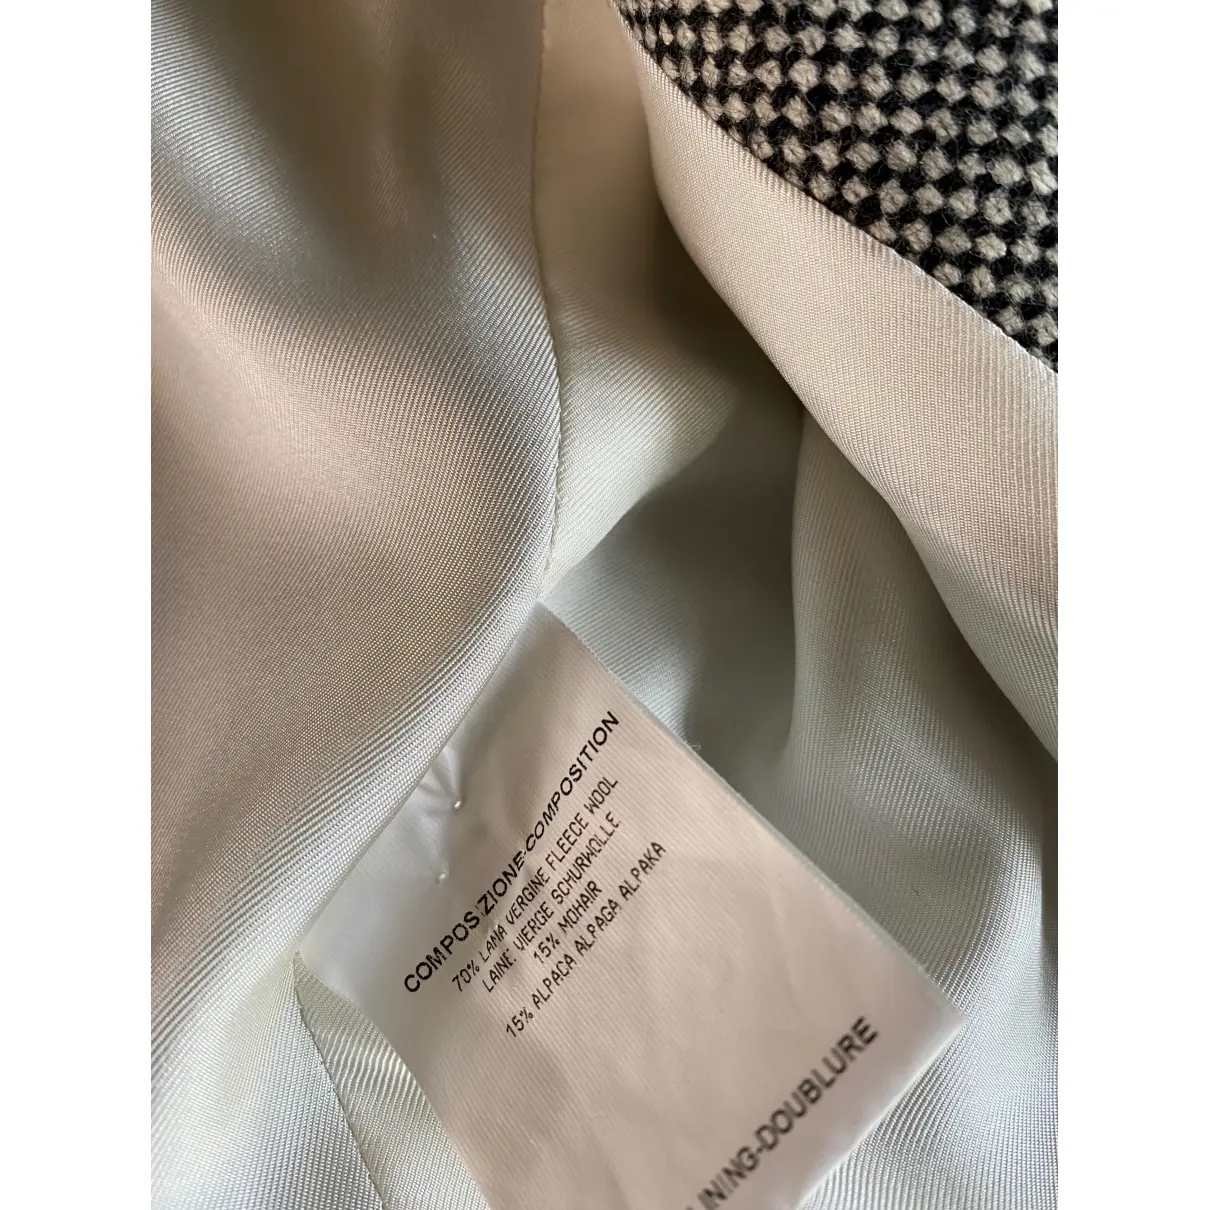 Buy Yves Saint Laurent Wool short vest online